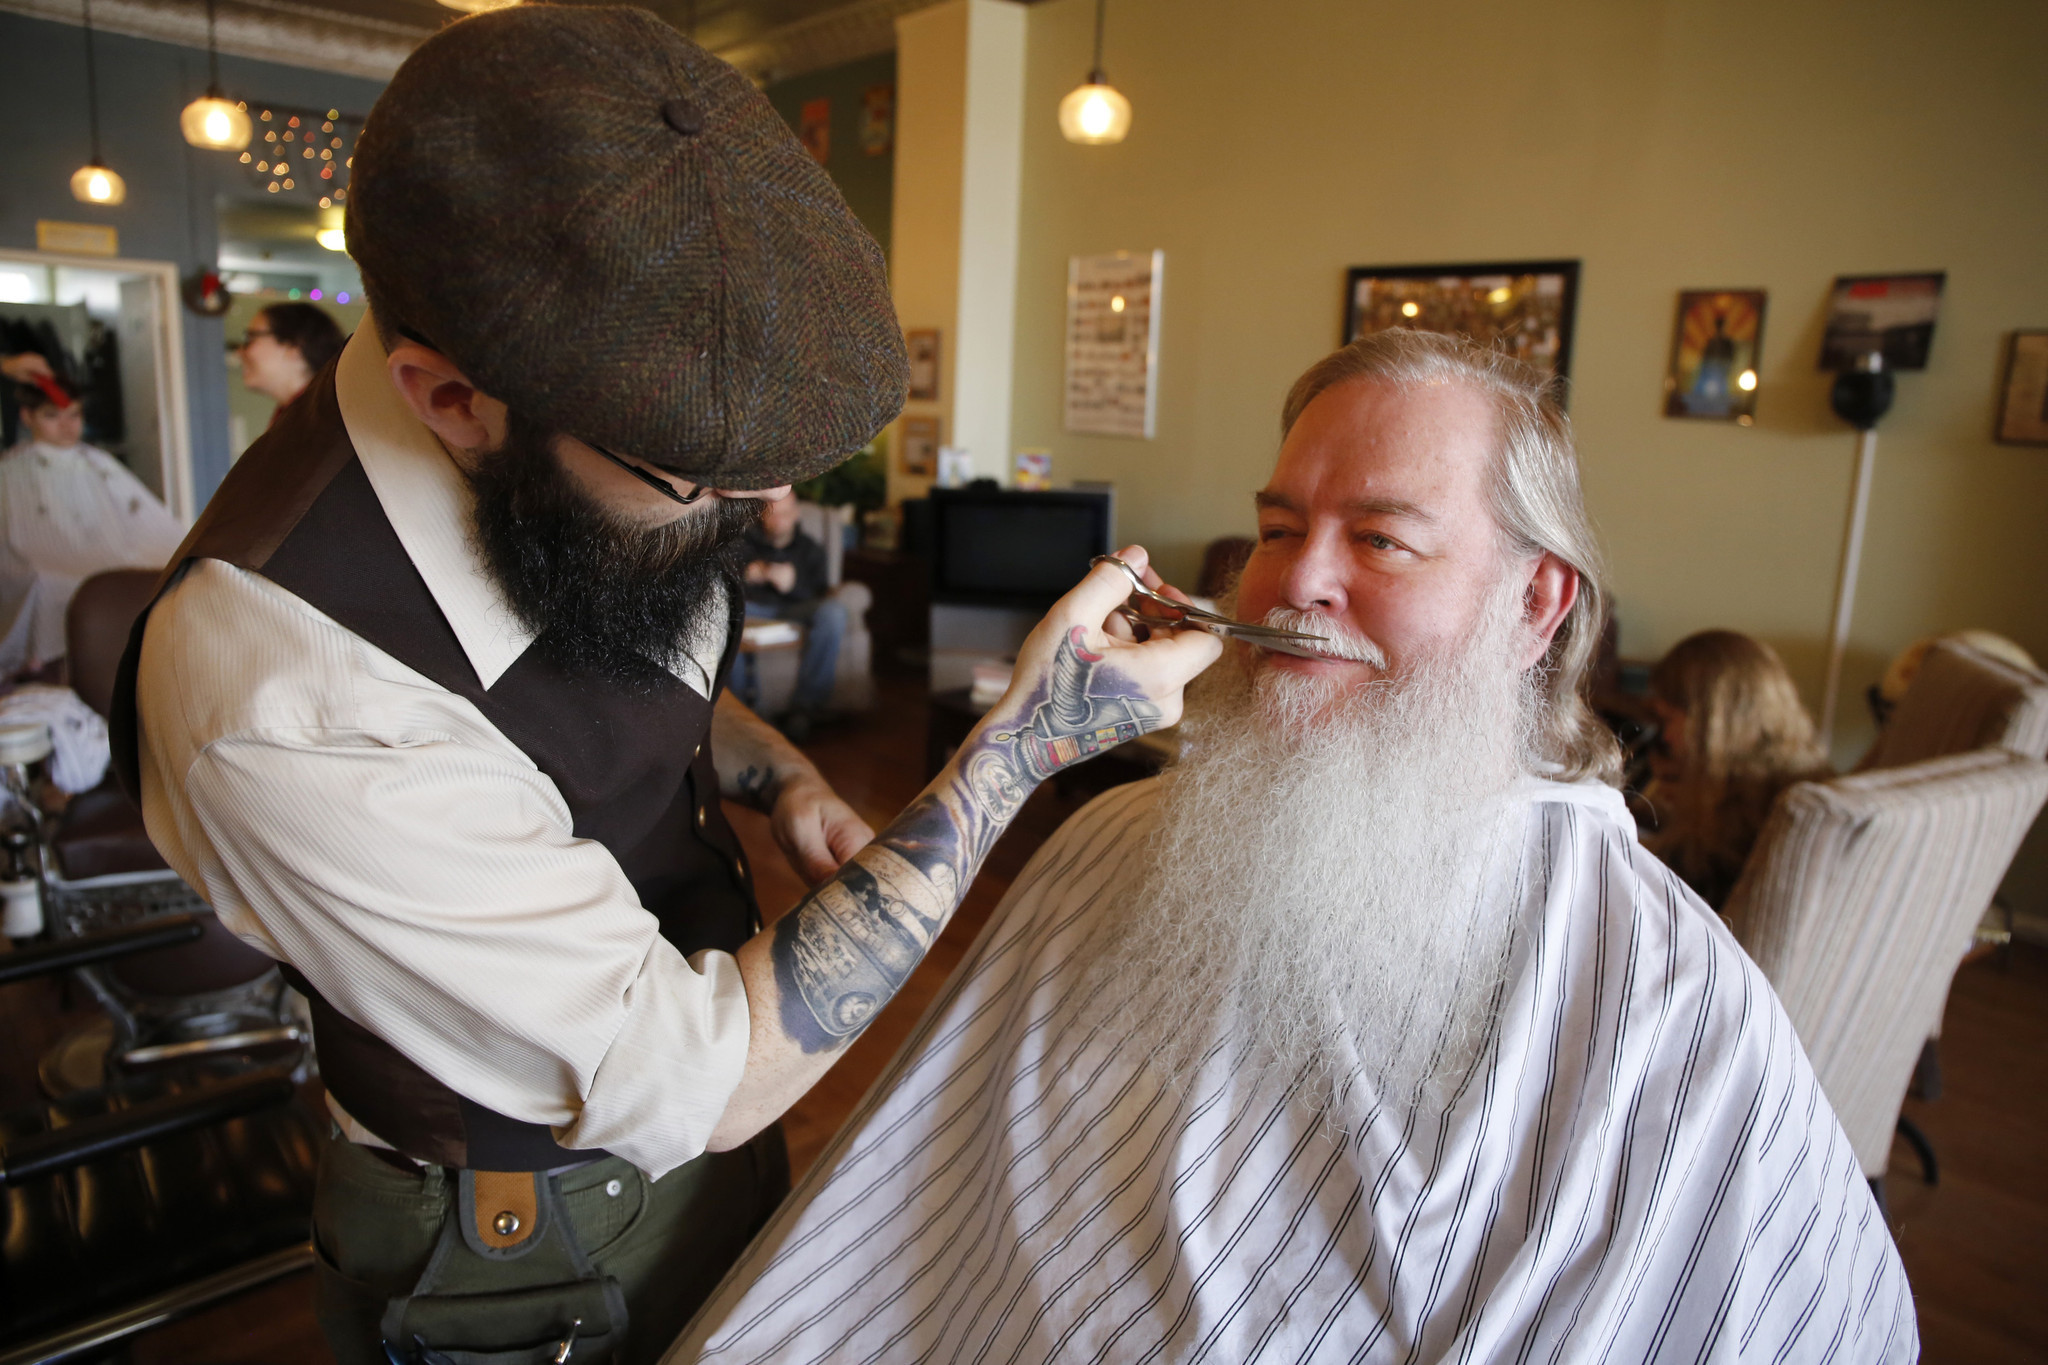 Specialty barbers focus on beards as facial hair grows